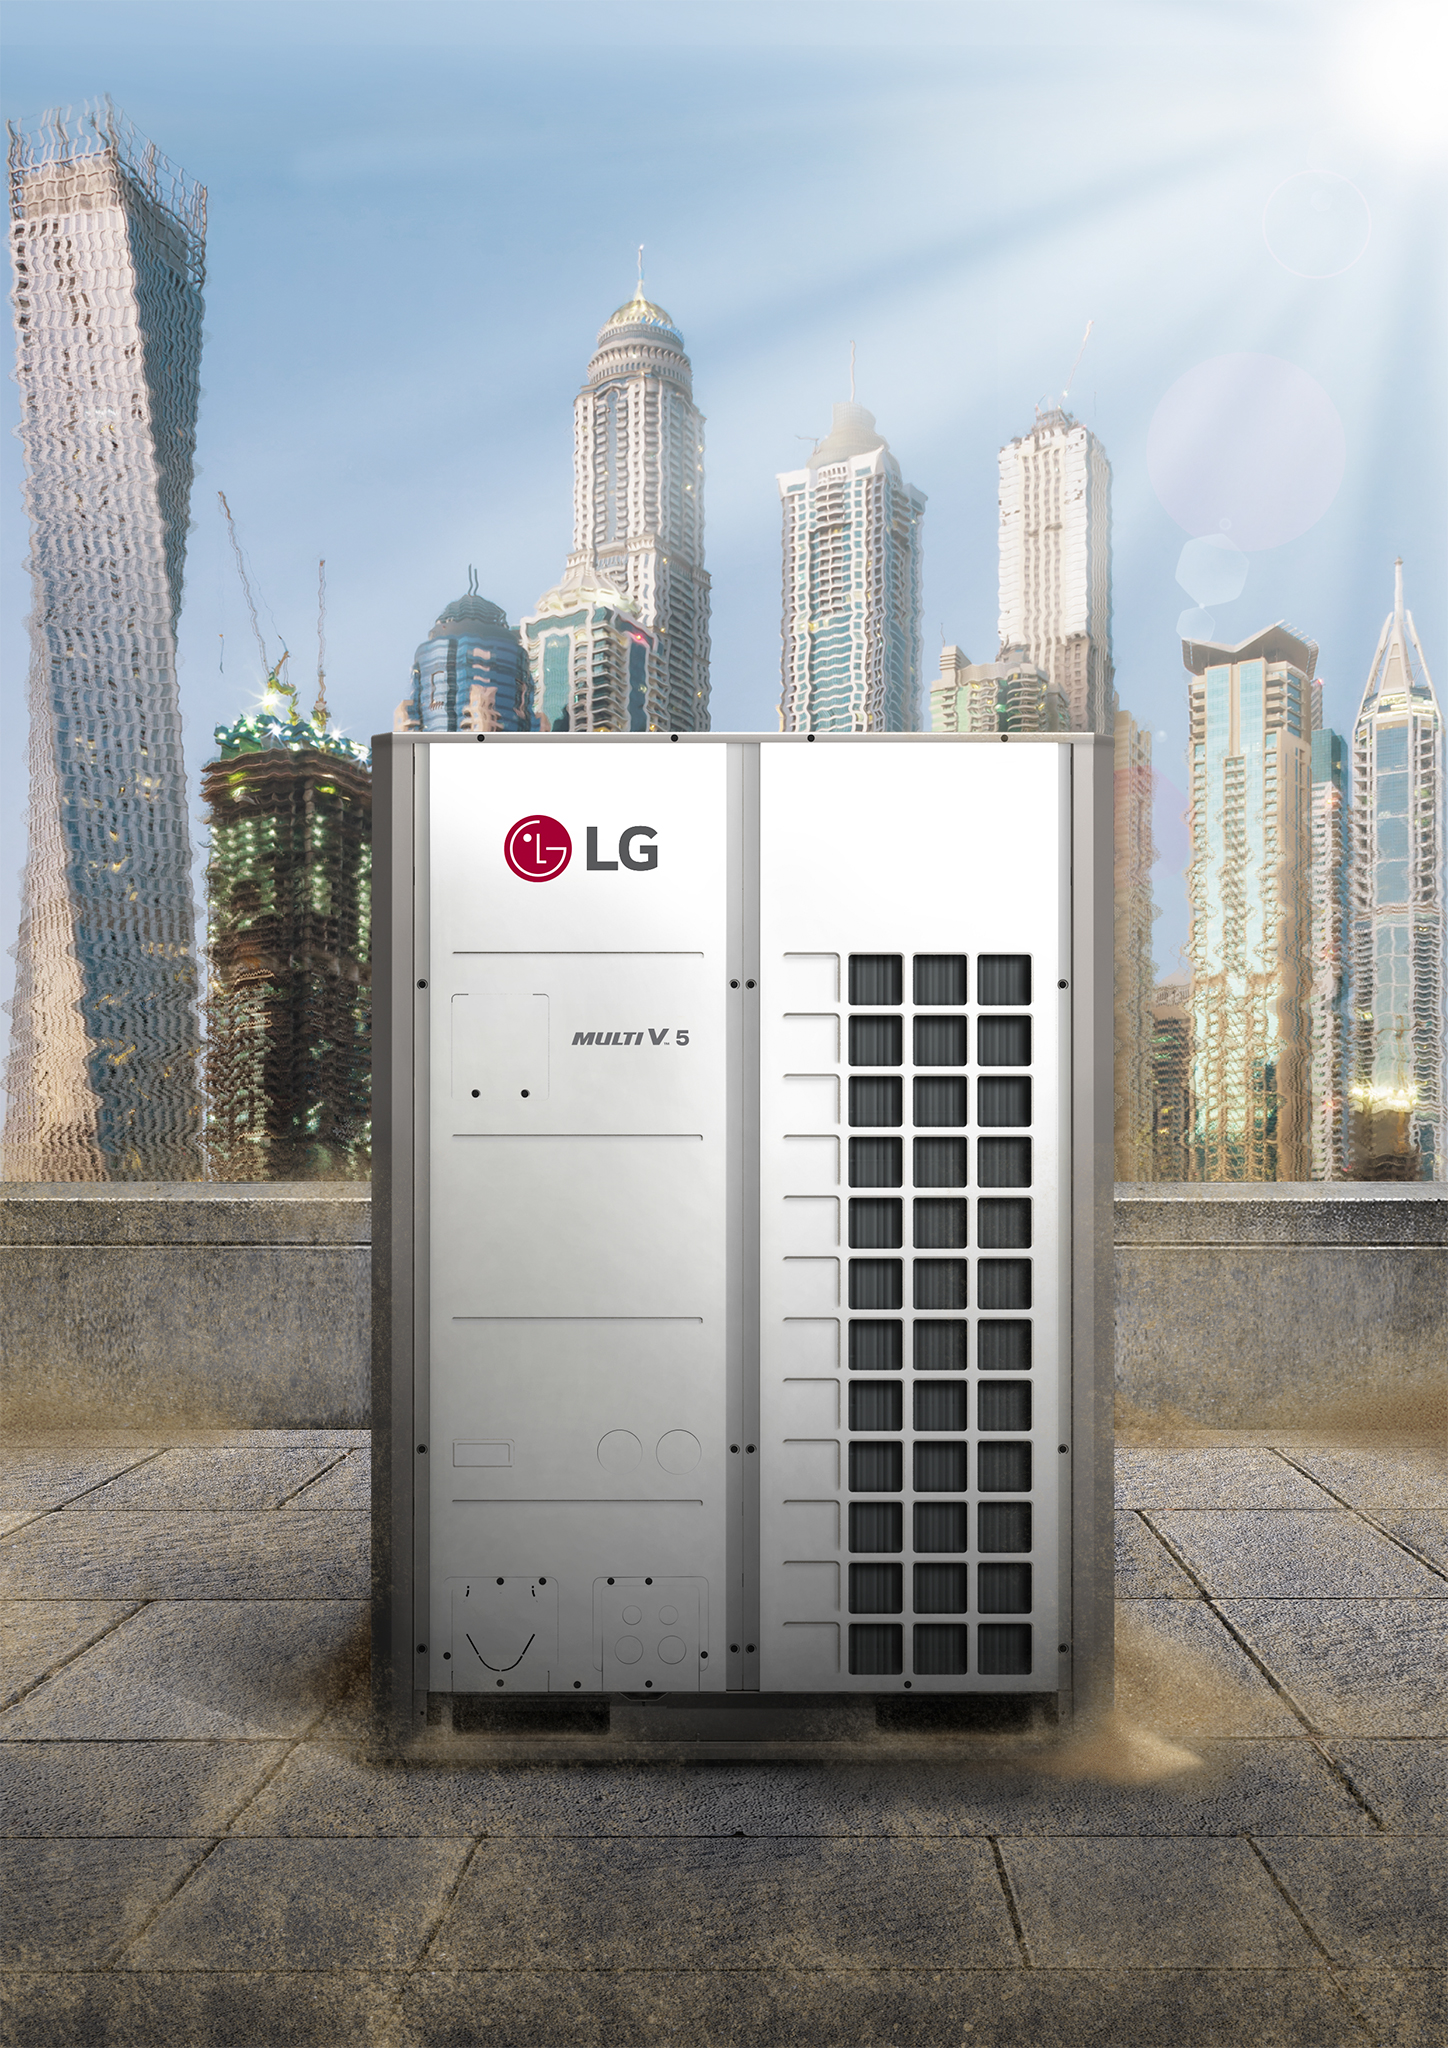 New arrival: LG MULTI V 5 Variable Refrigerant Flow solution « Tech